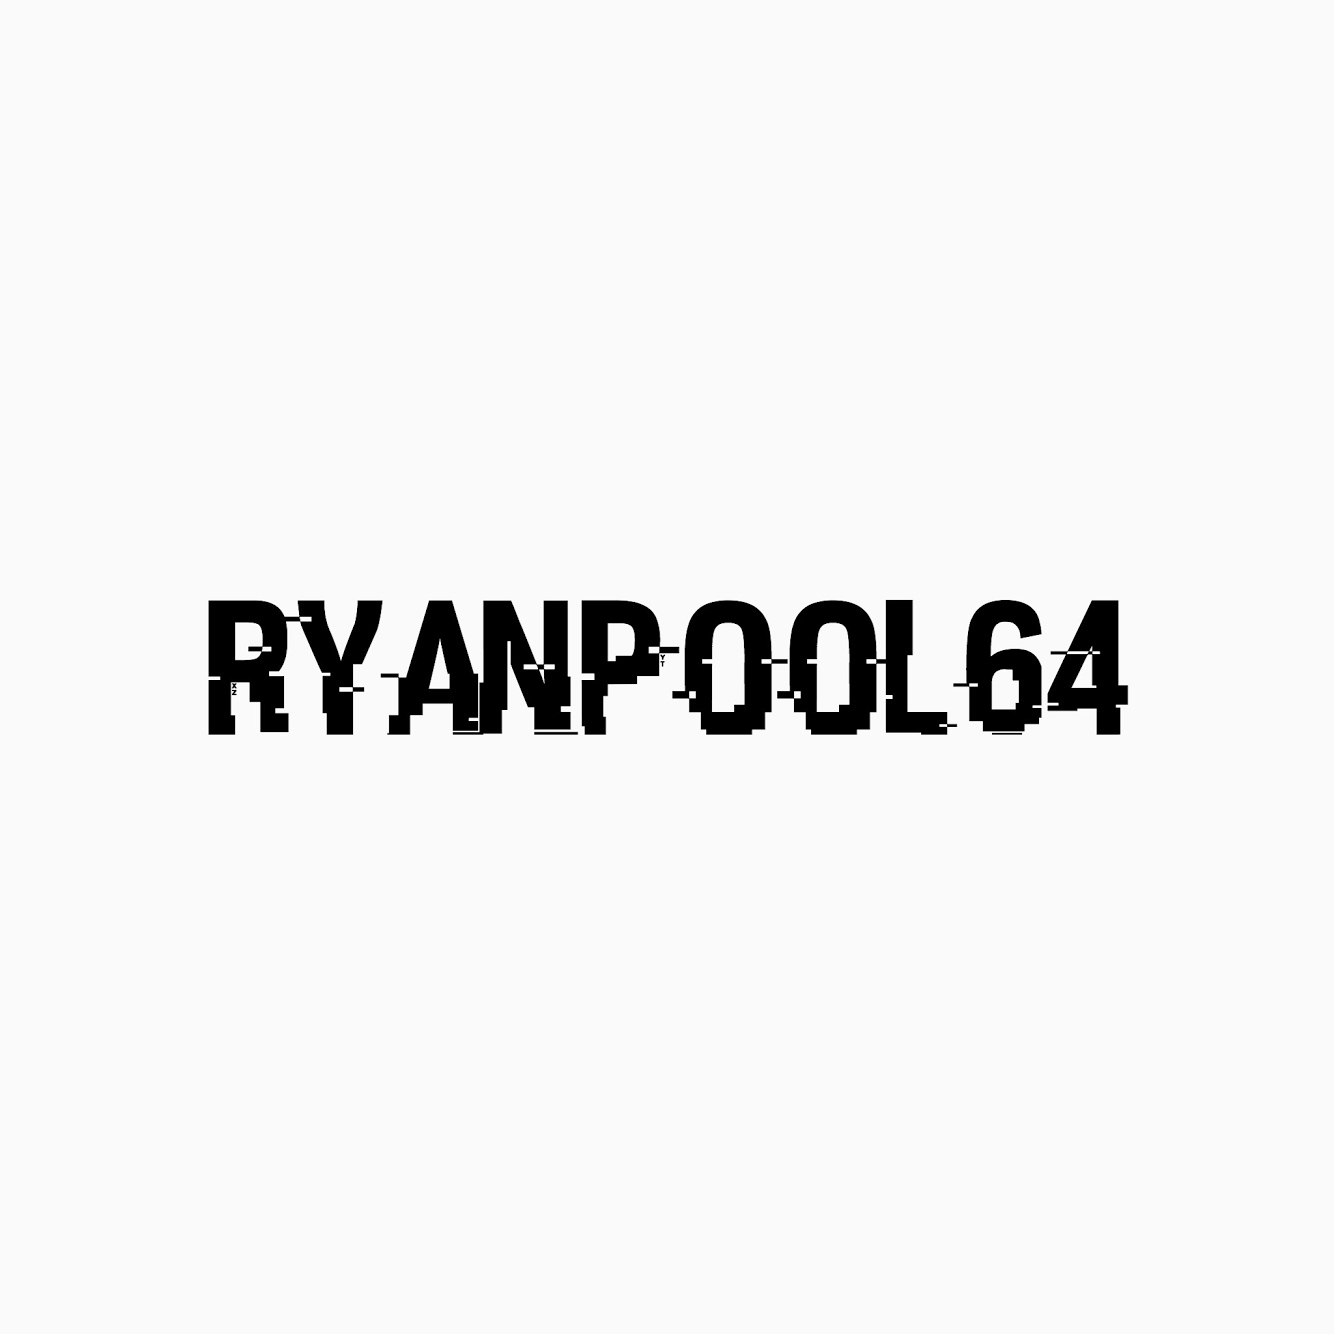 Ryan Pool64